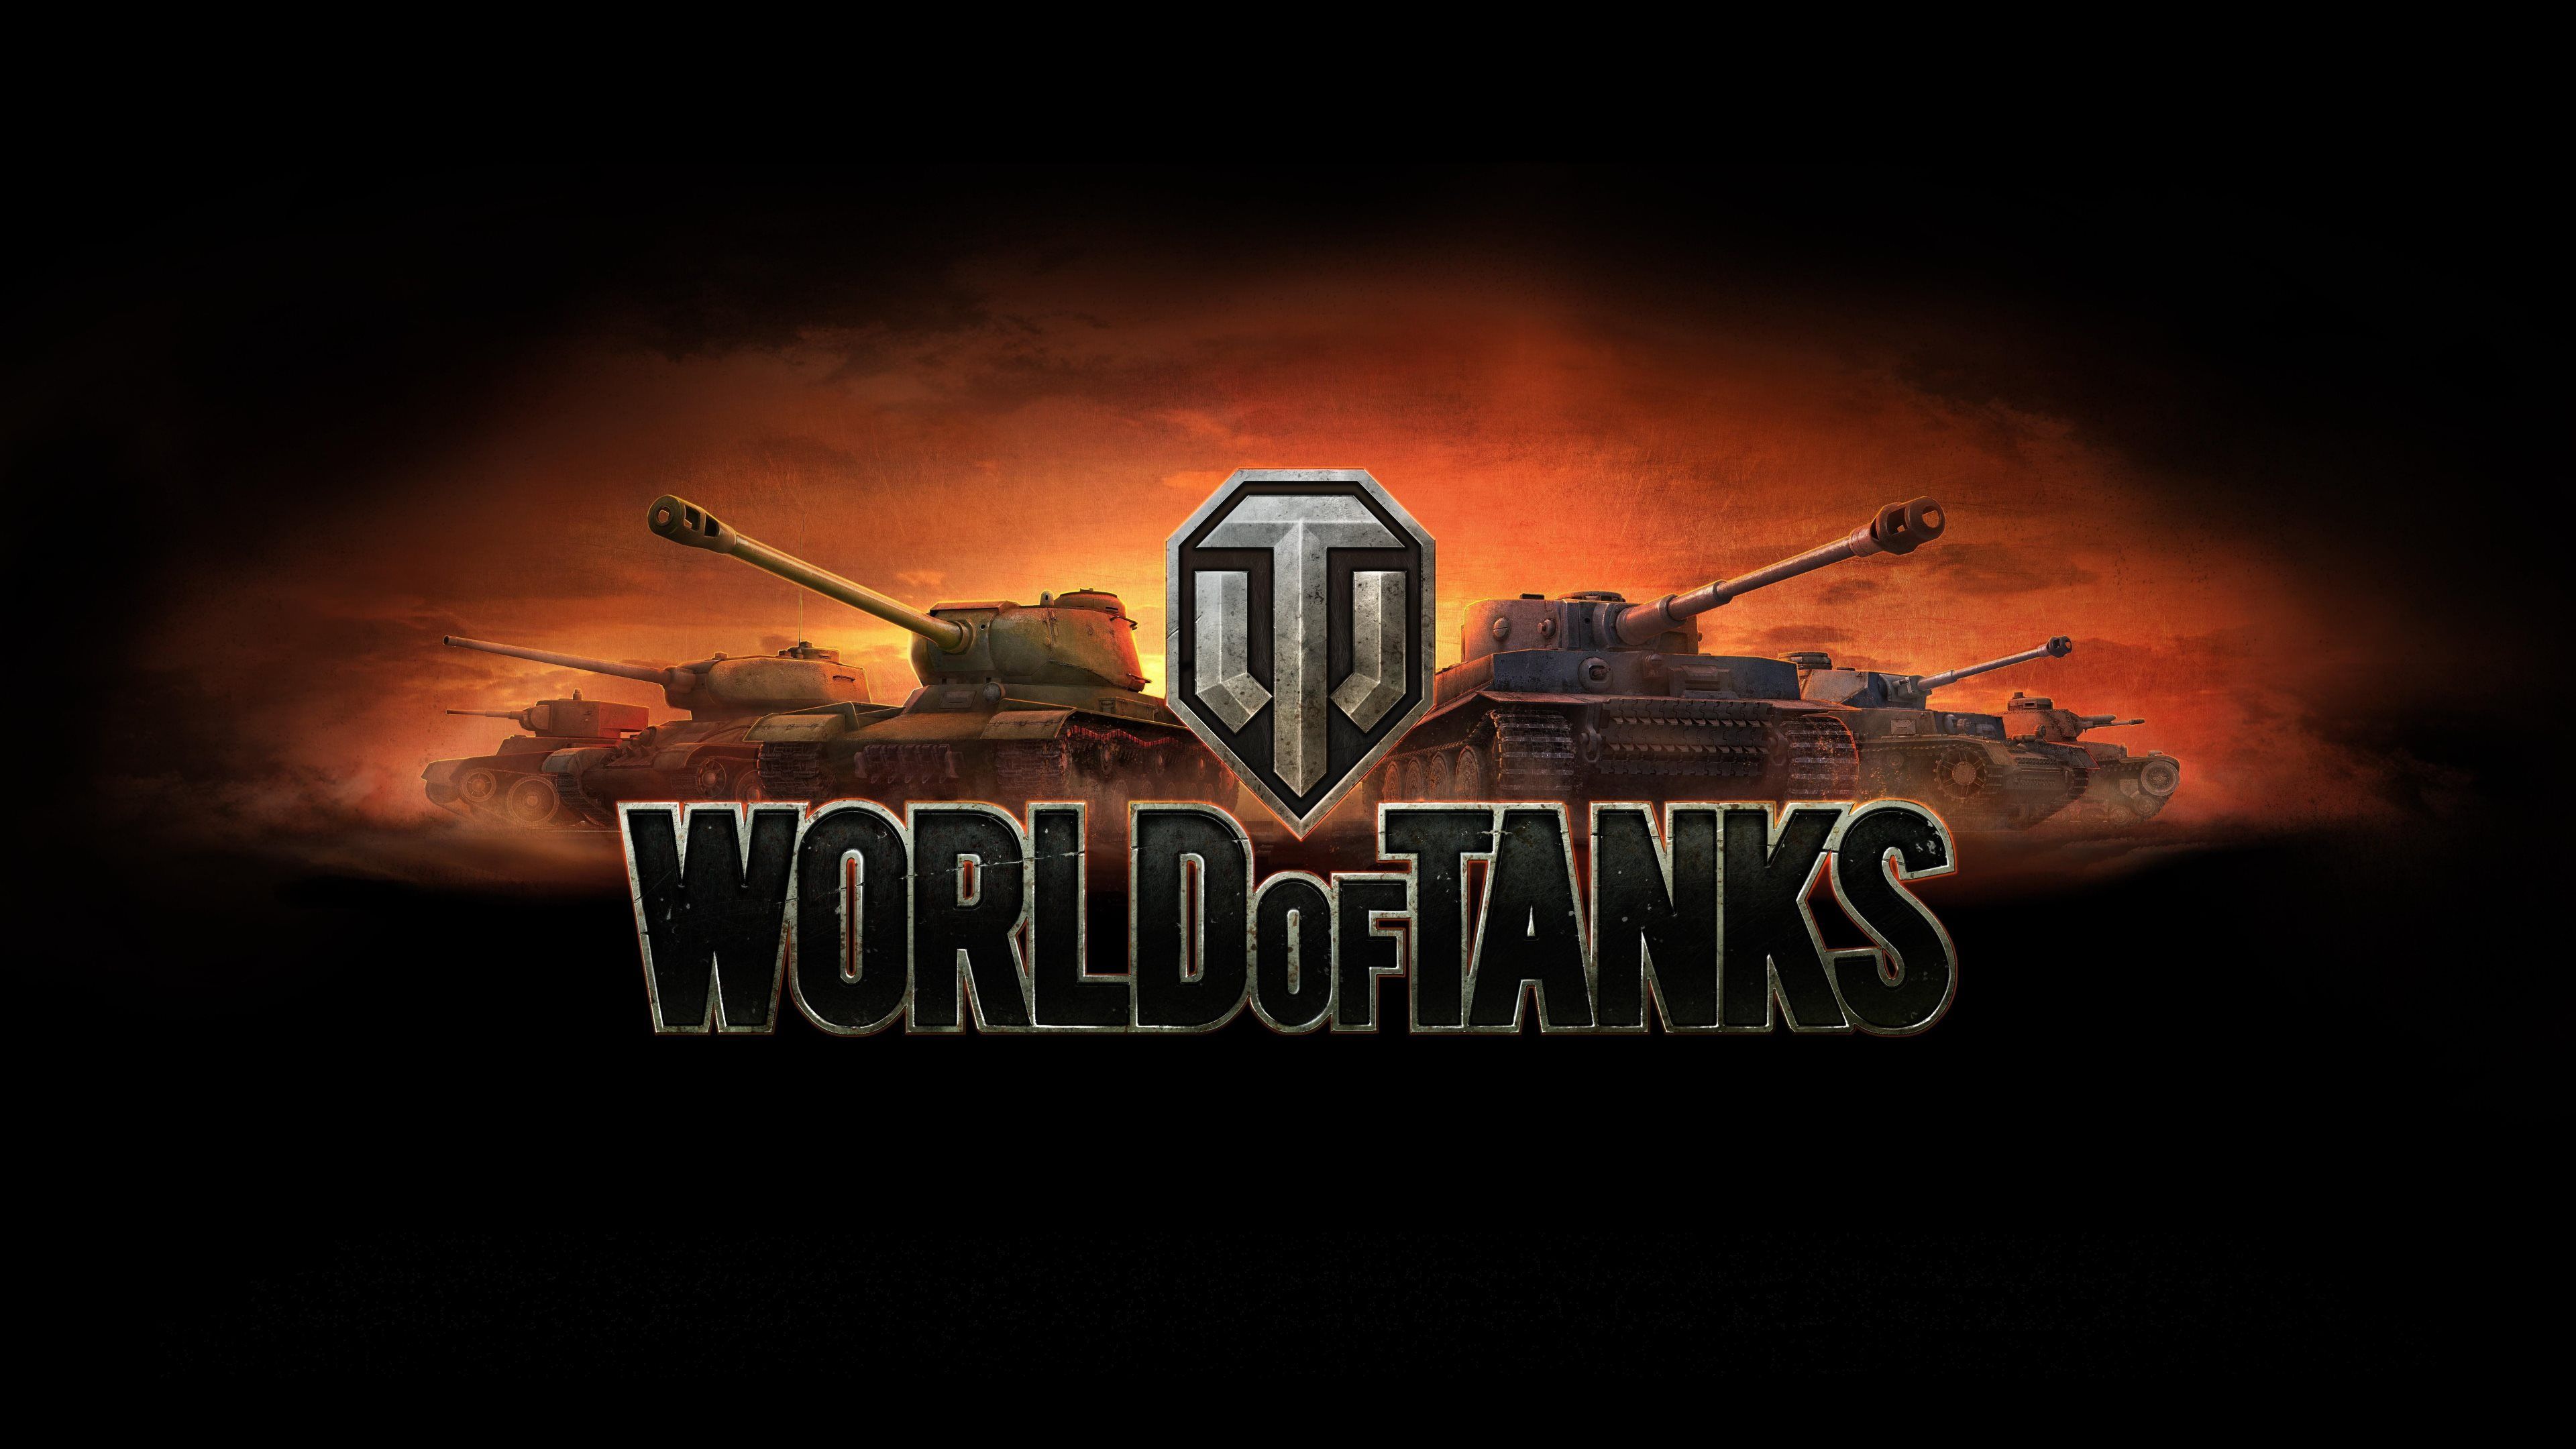 world of tanks wallpaper 1920x1080 Wallpapers